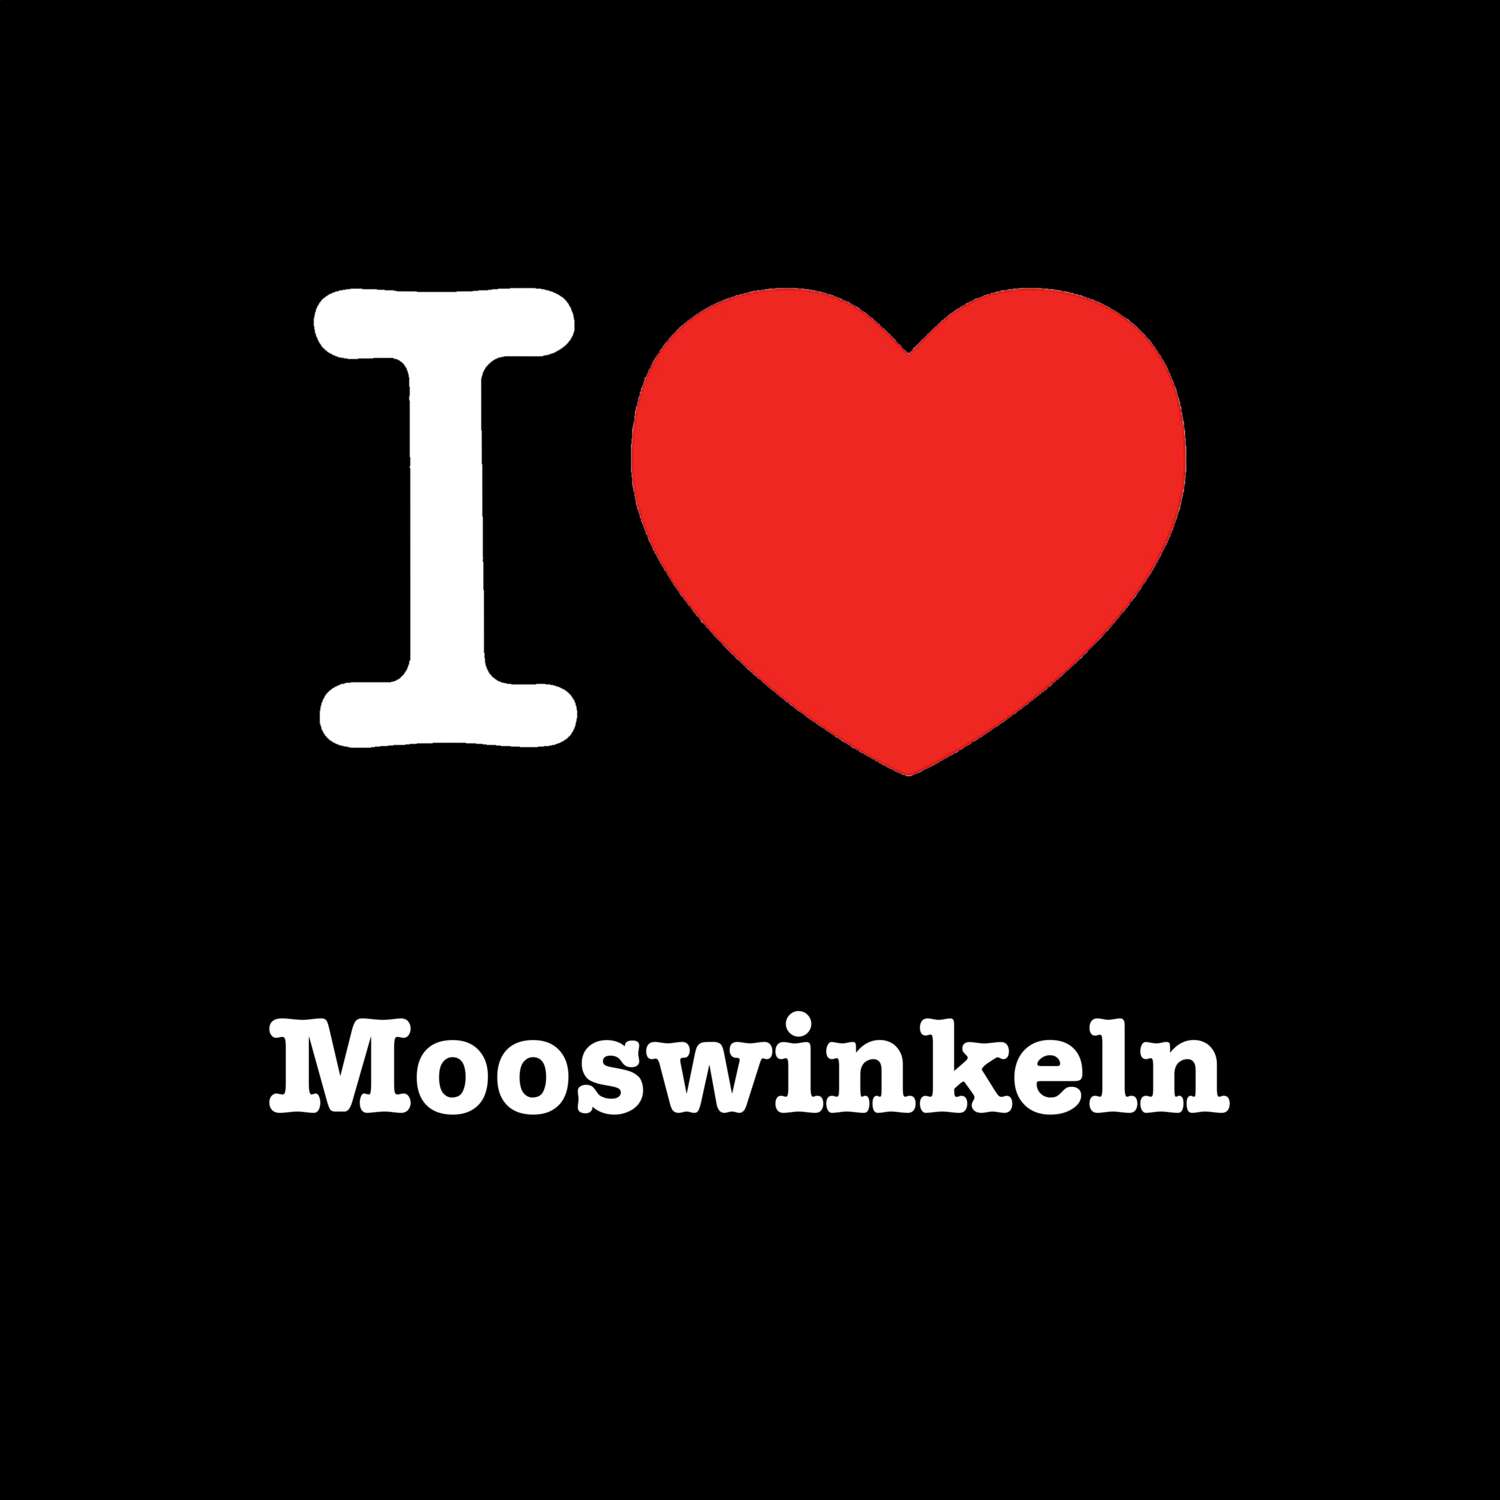 Mooswinkeln T-Shirt »I love«